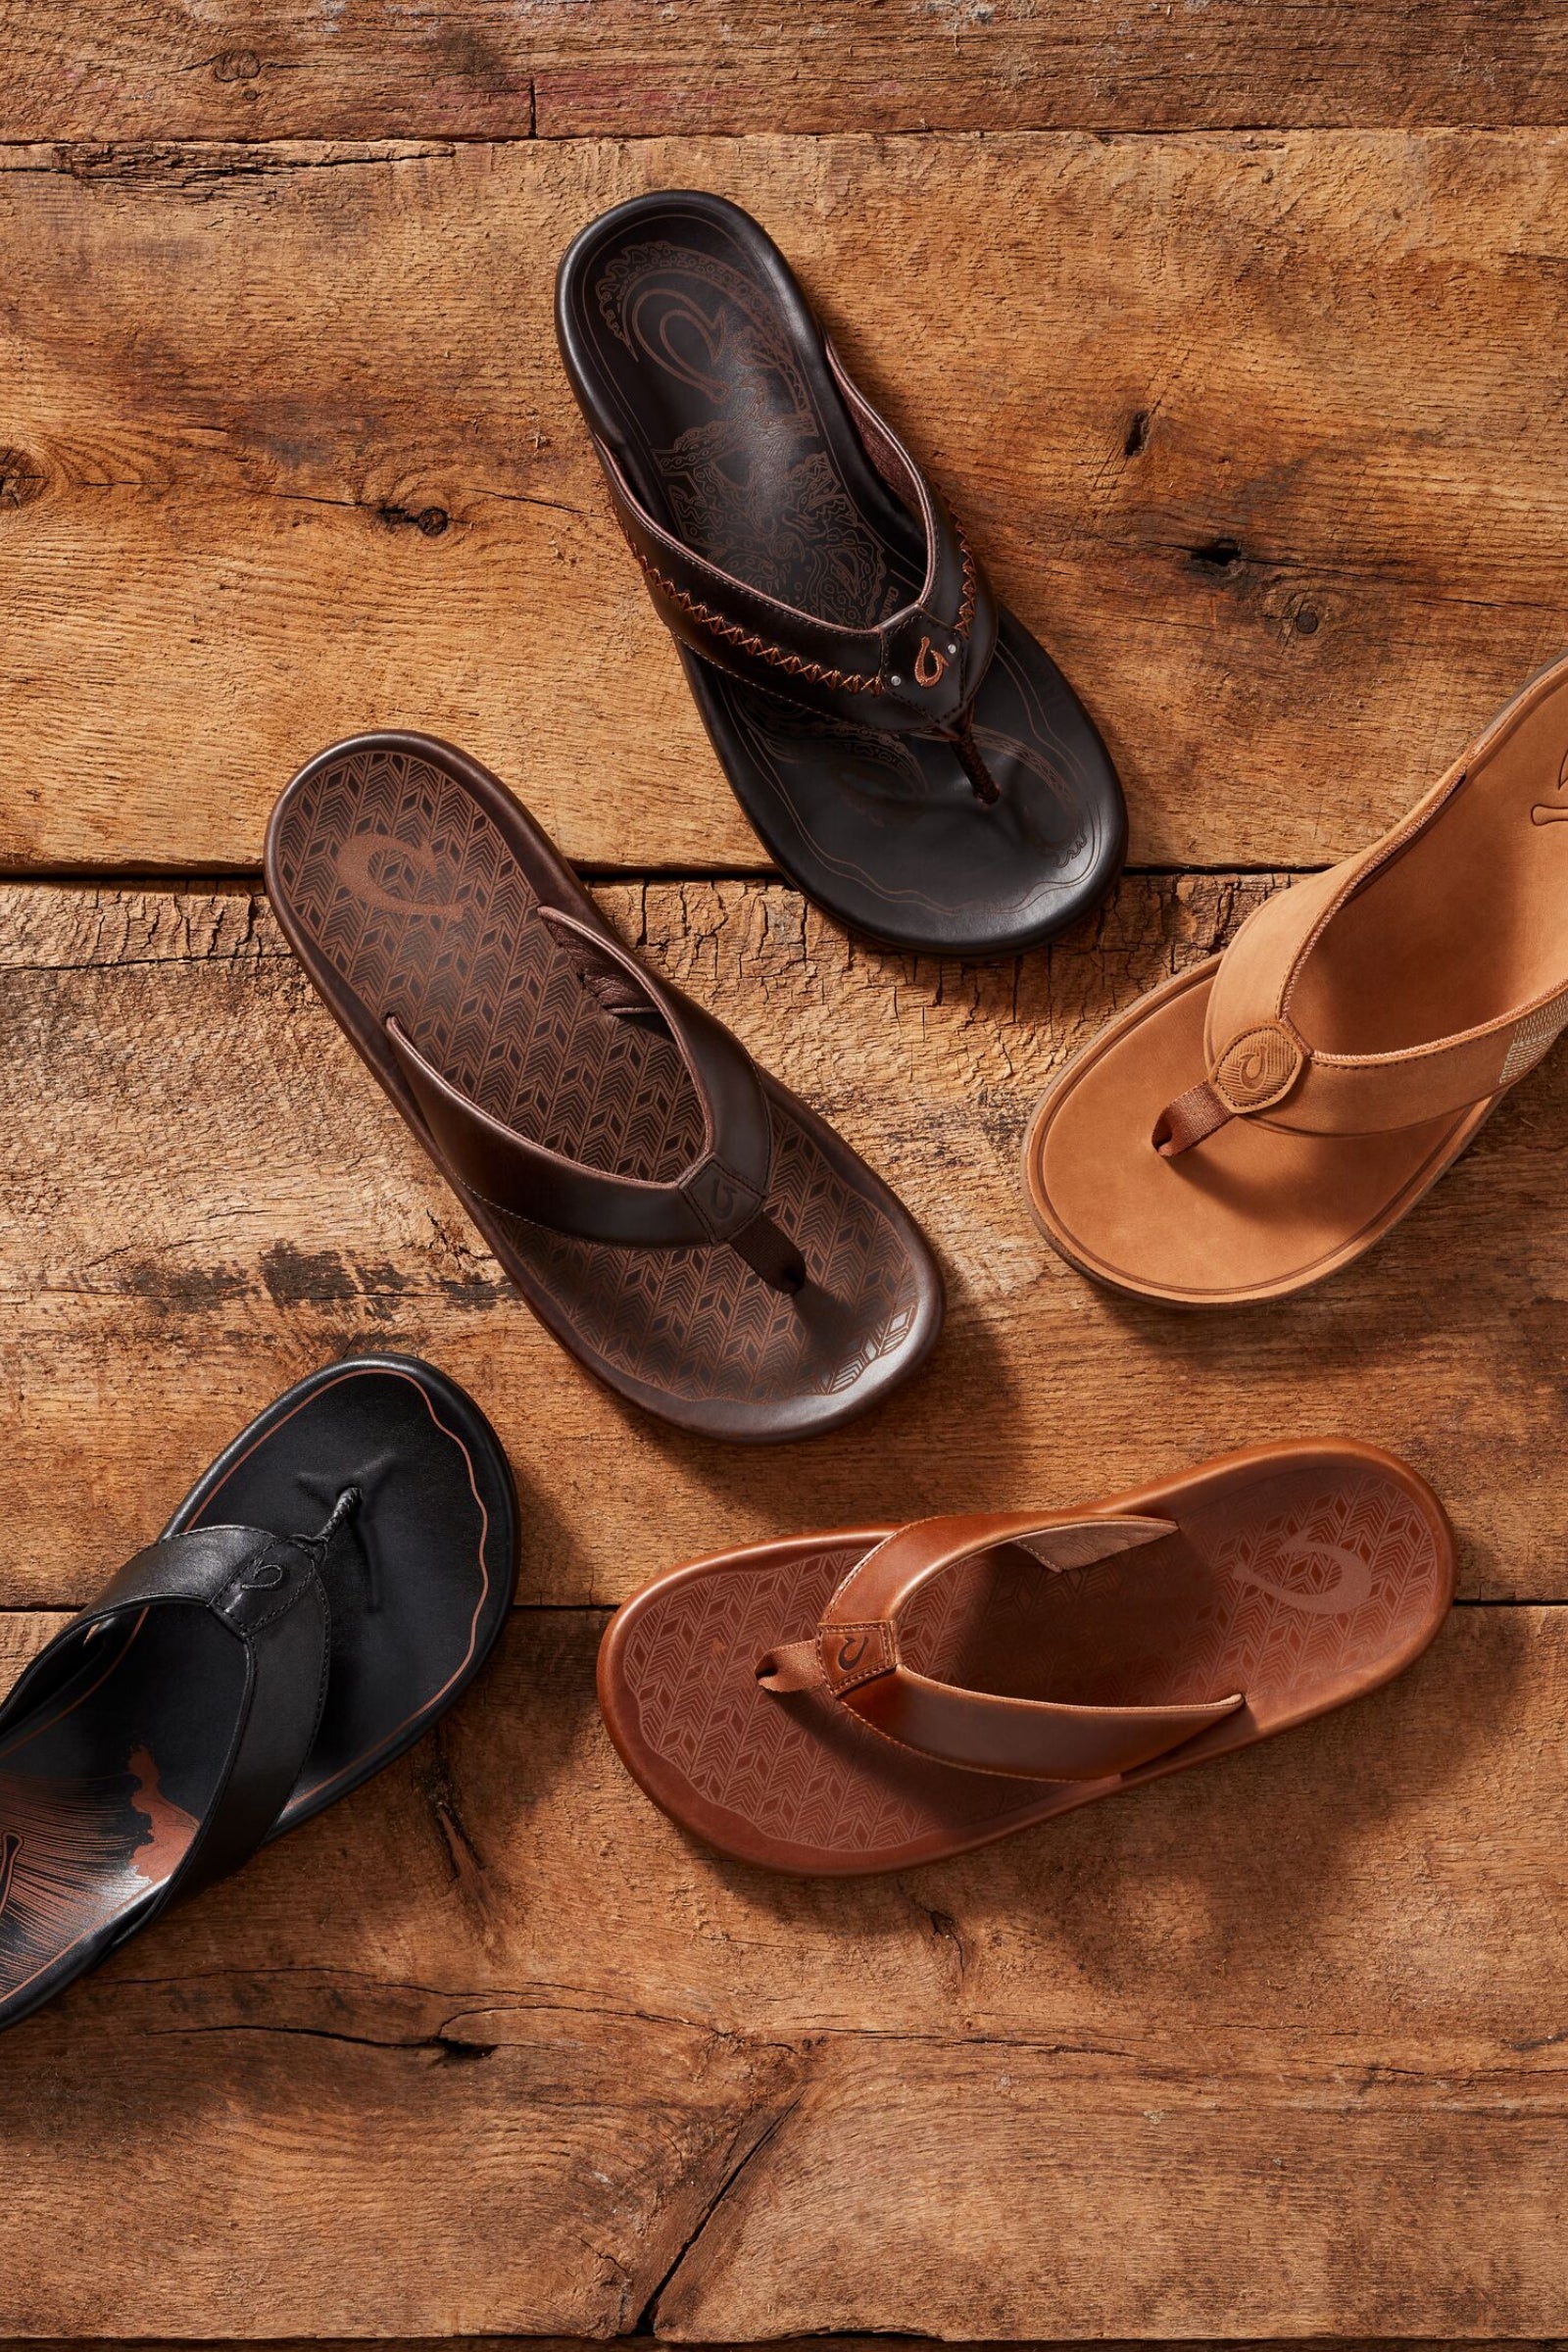 Our 10 Favorite Leather Sandals for Men & Women – OluKai